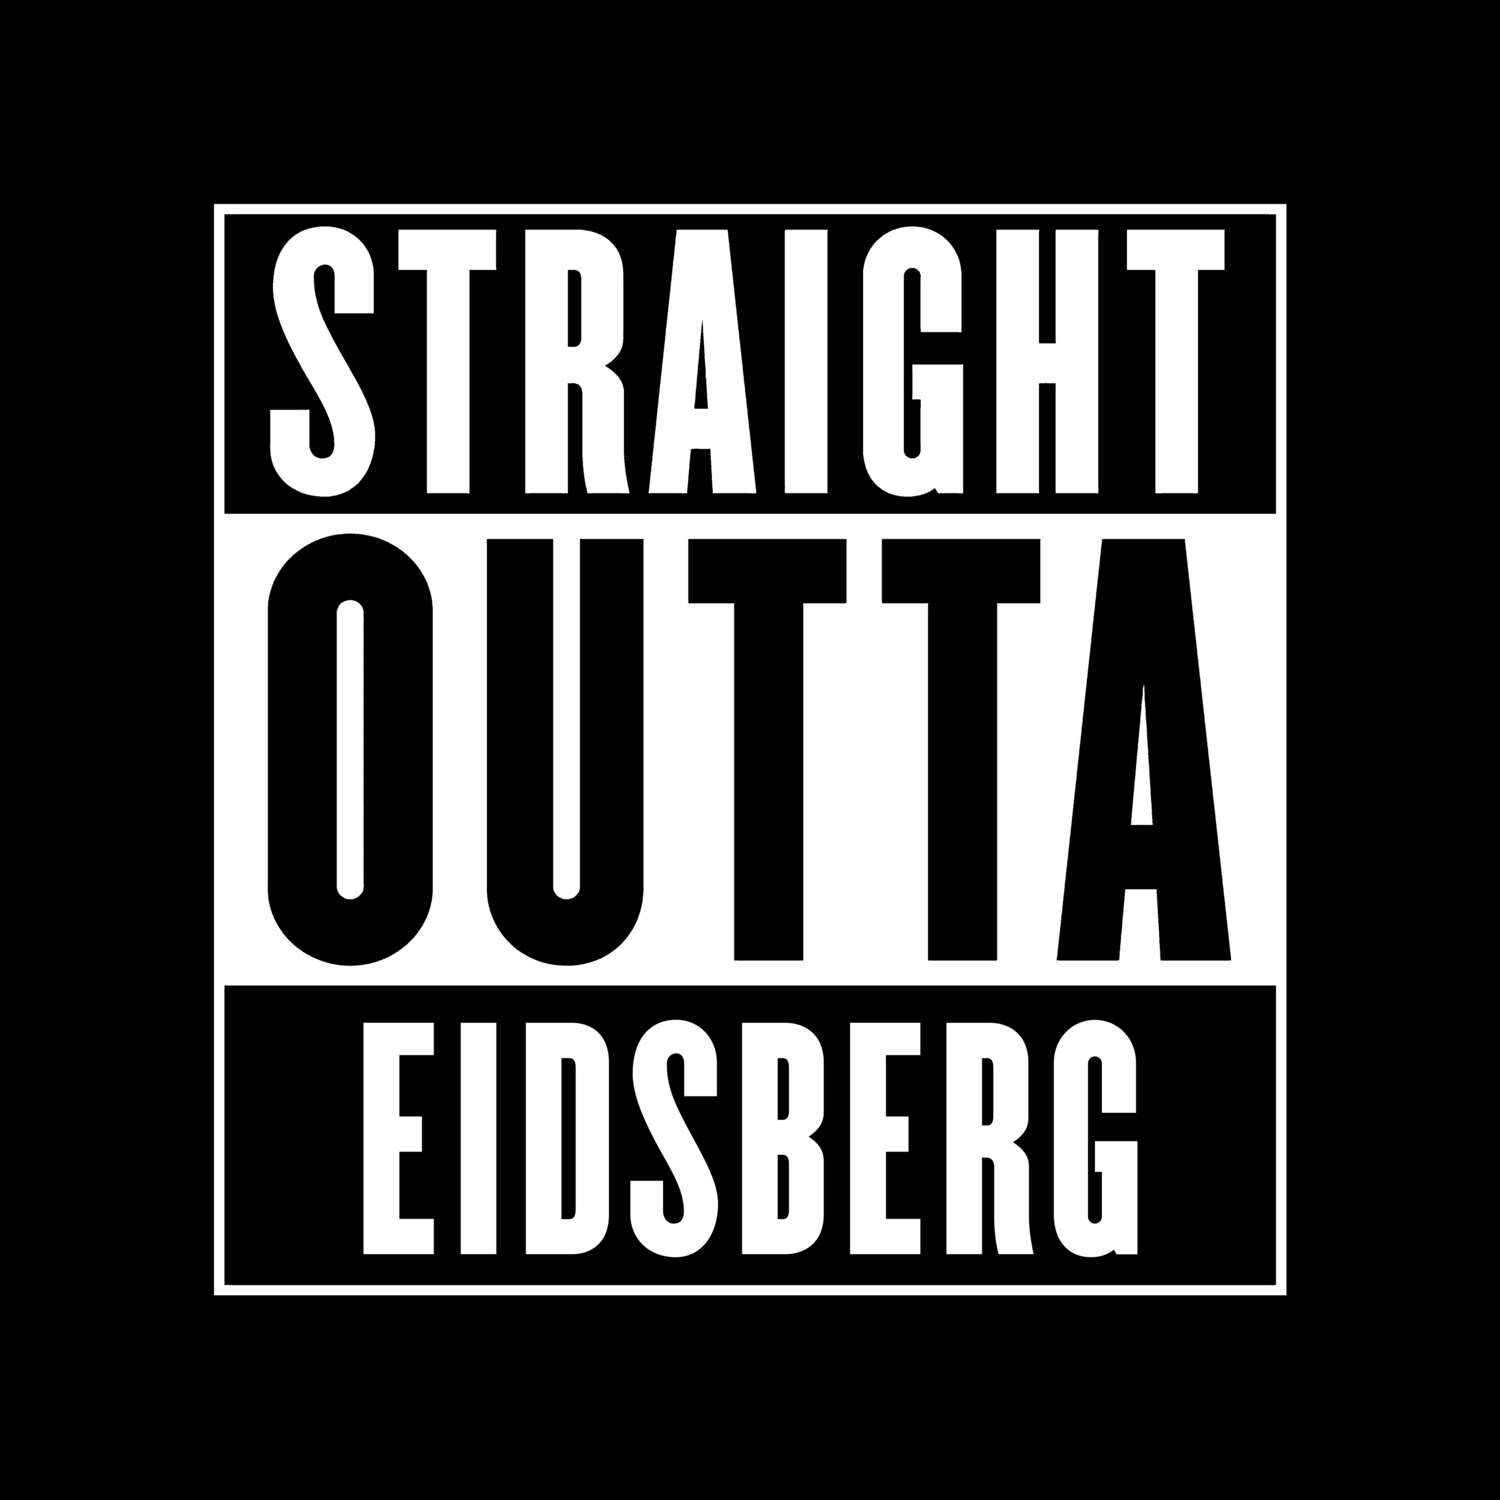 Eidsberg T-Shirt »Straight Outta«